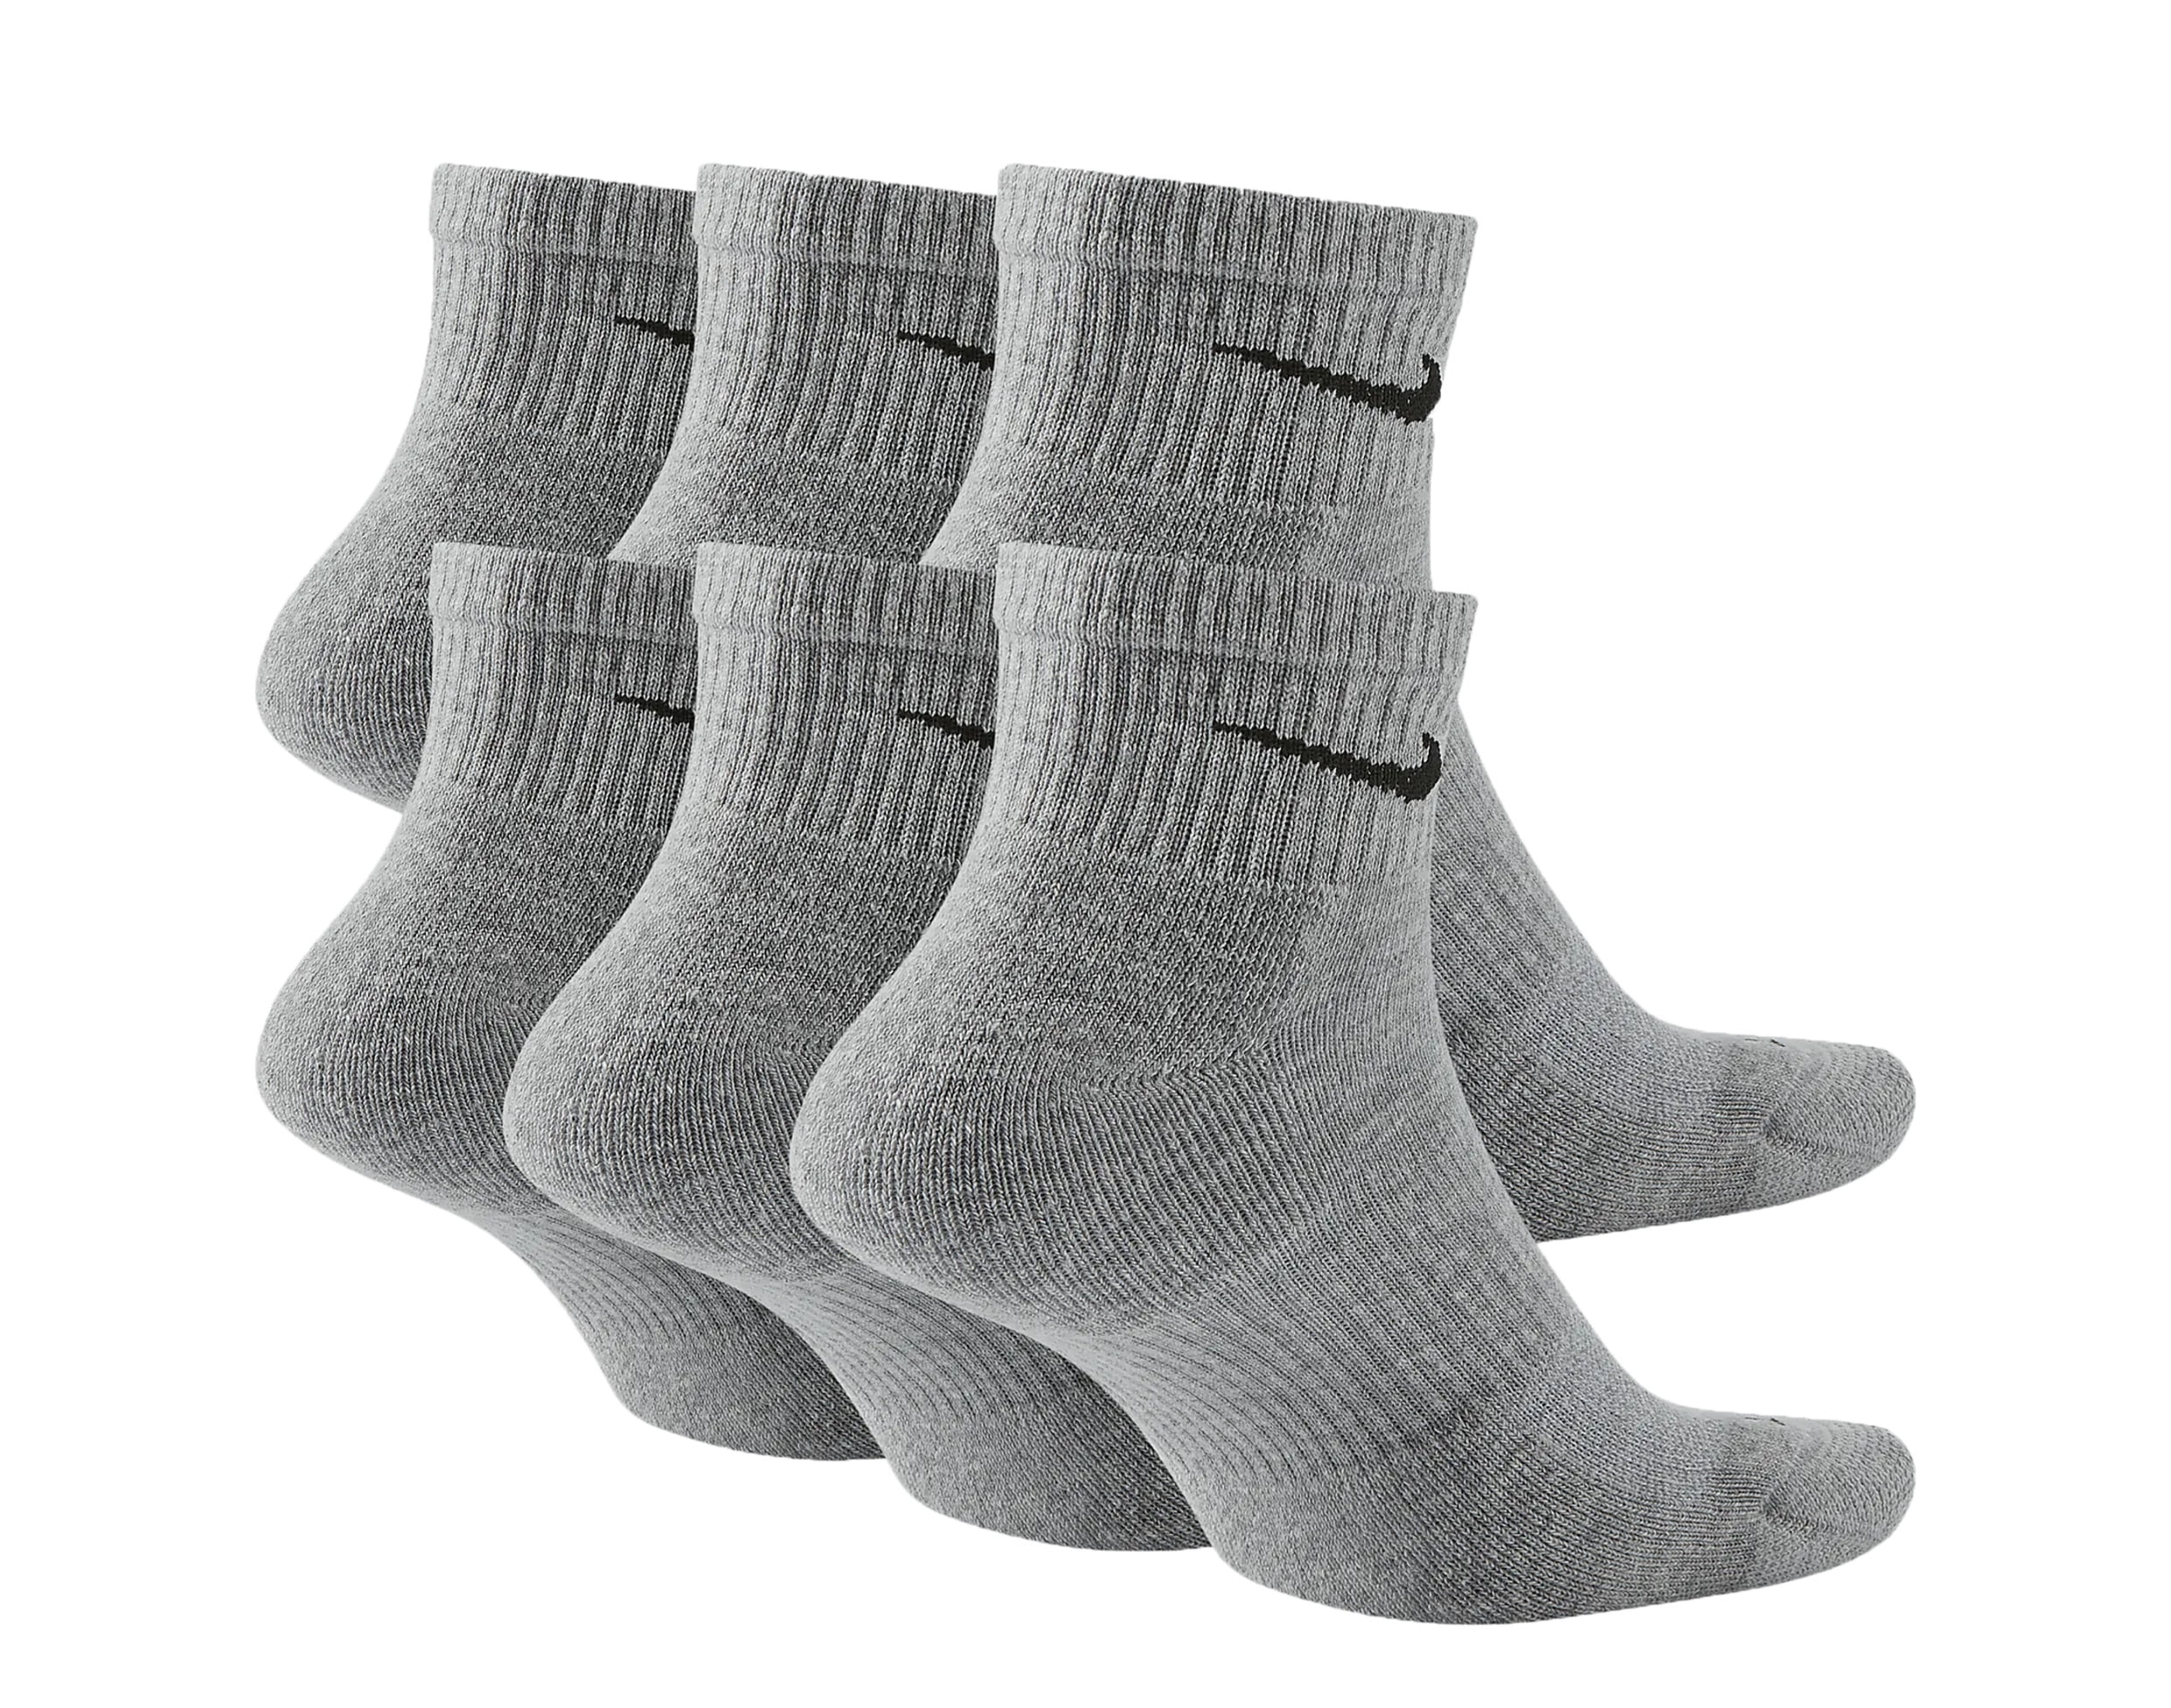 grey nike socks 6 pack